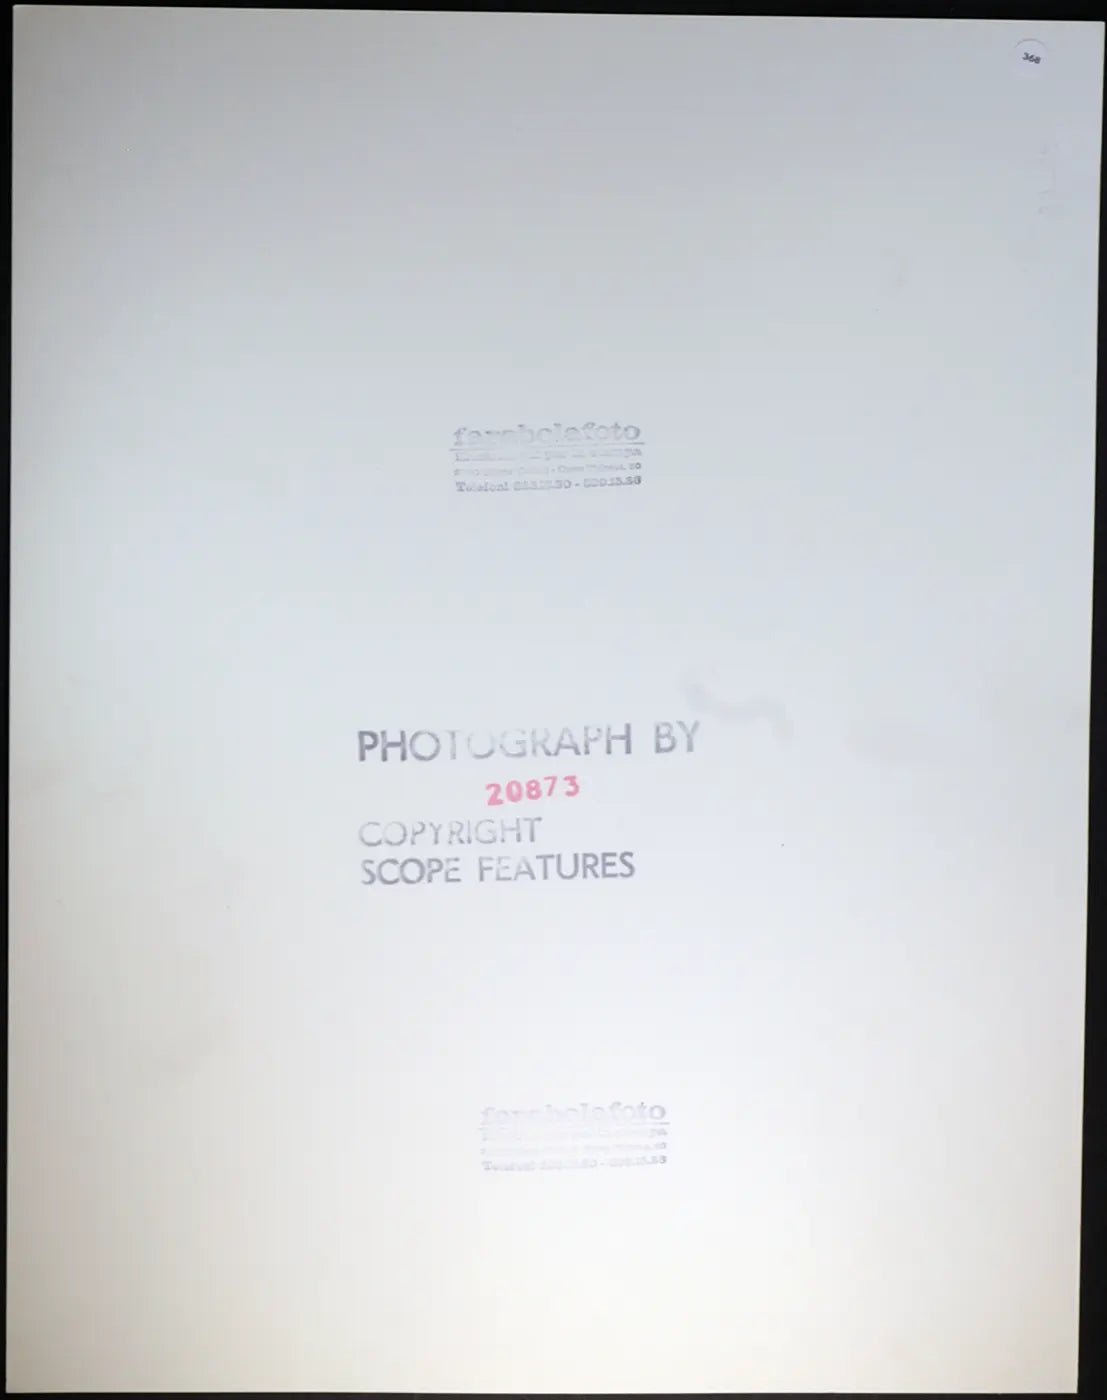 Mark McGann Film John e Yoko 1985 Ft 368 - Stampa 27x37 cm - Farabola Stampa ai sali d'argento